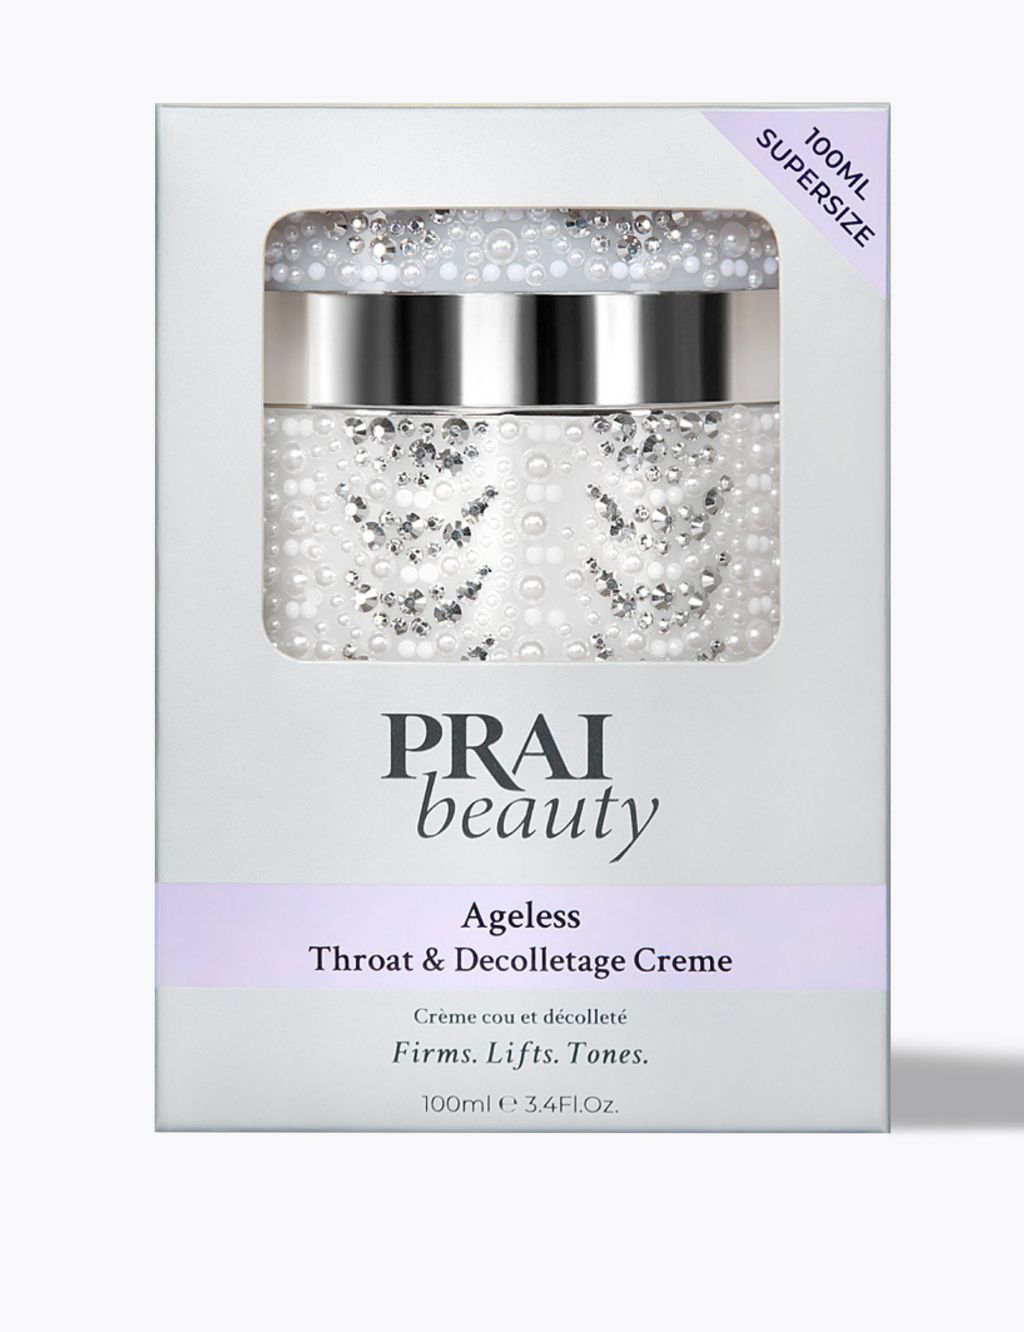 Ageless Throat & Decolletage Crème Cascading Diamonds Limited Edition